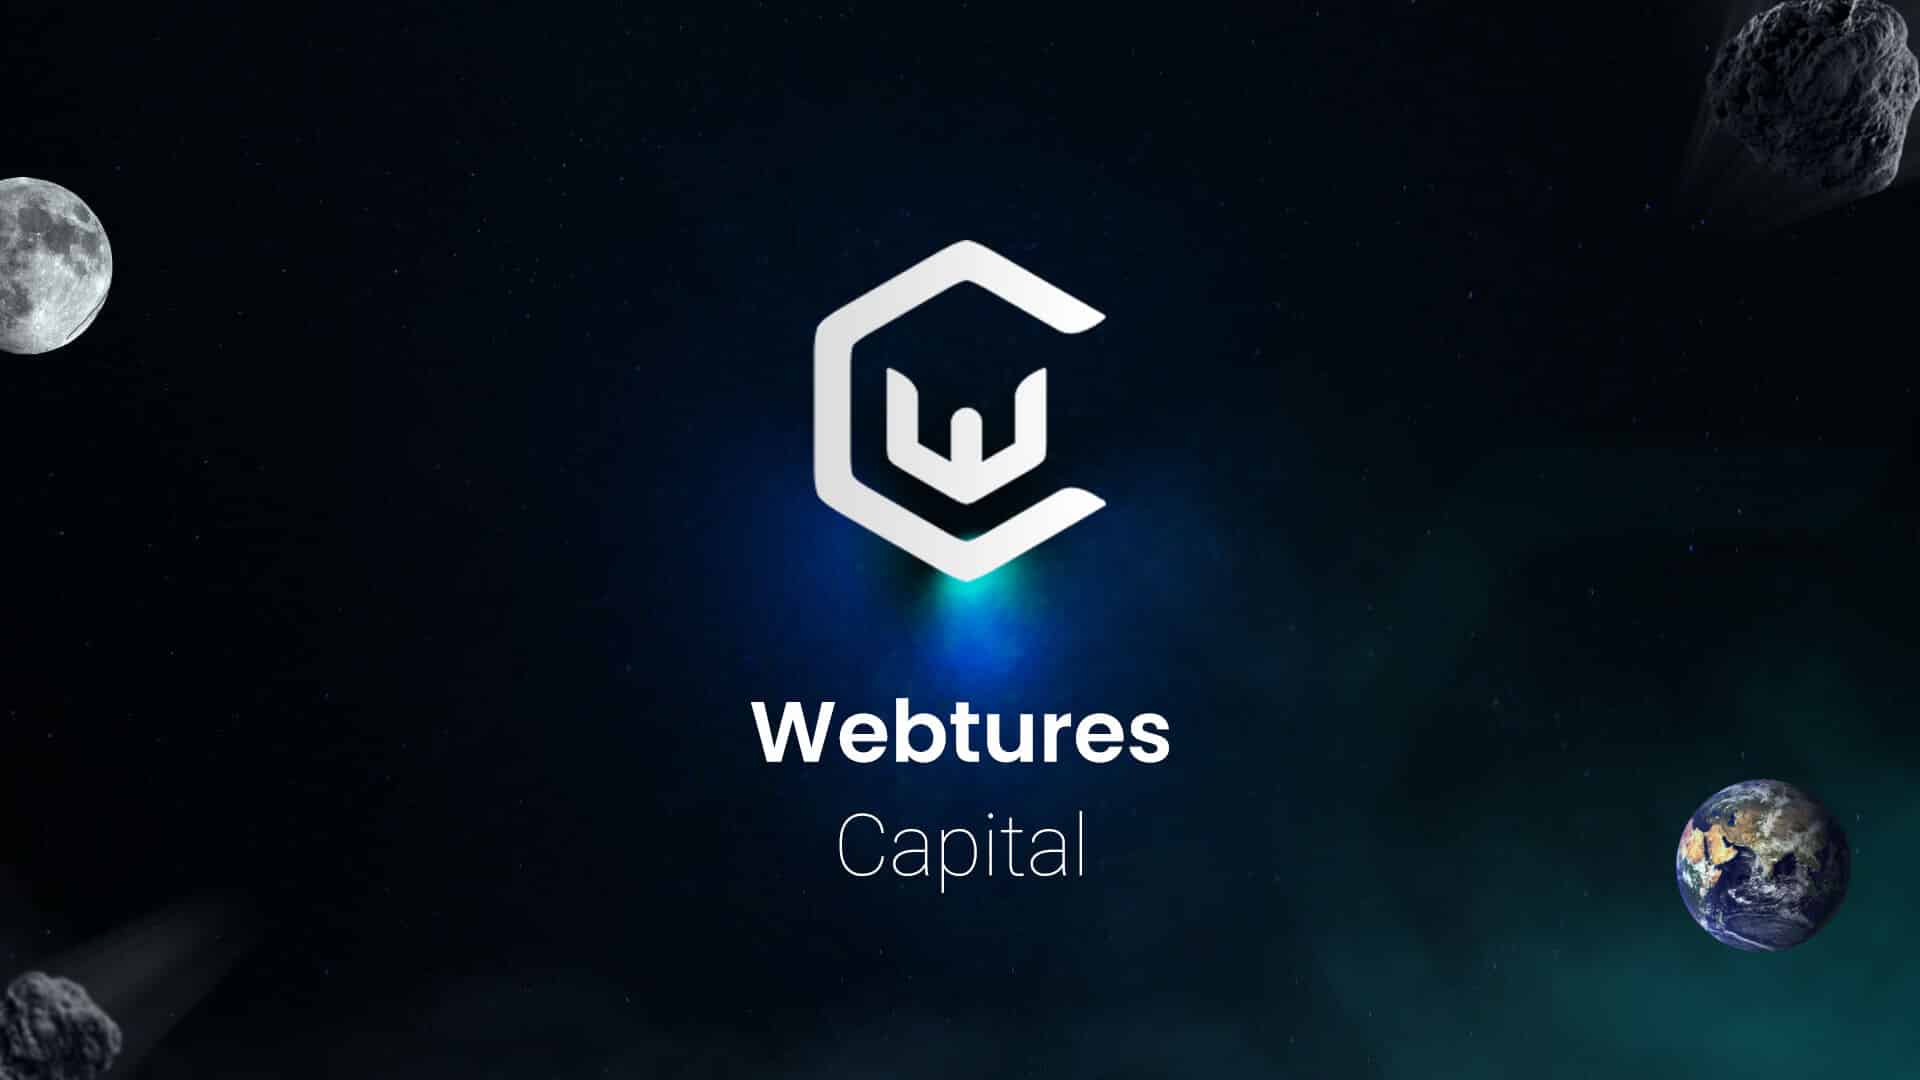 Webtures Capital